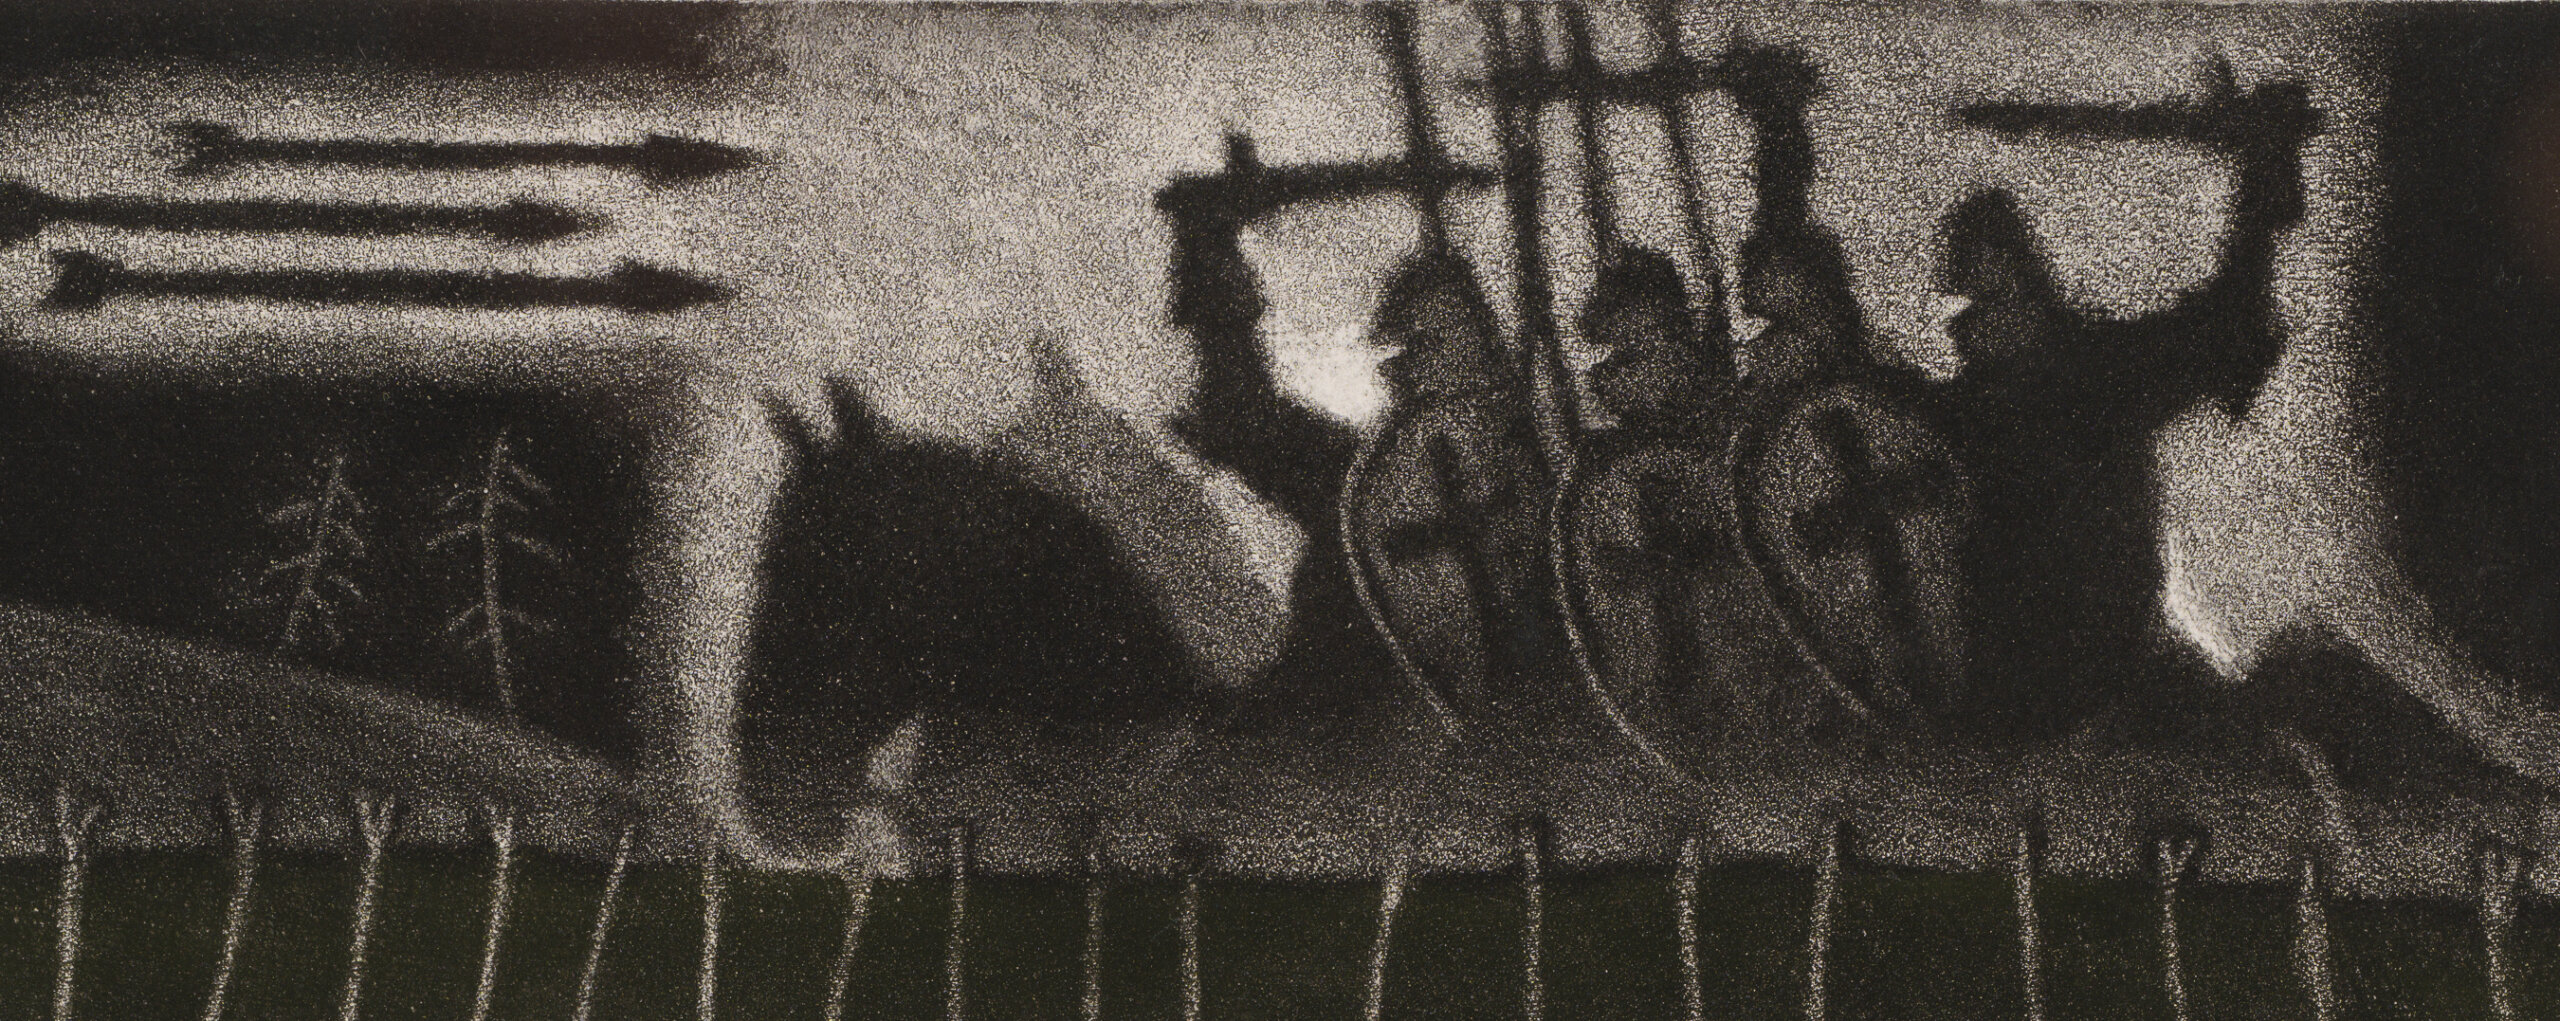 Kaljo Põllu “Lääne”, 1980. Plm 36,5 x 49,5 cm